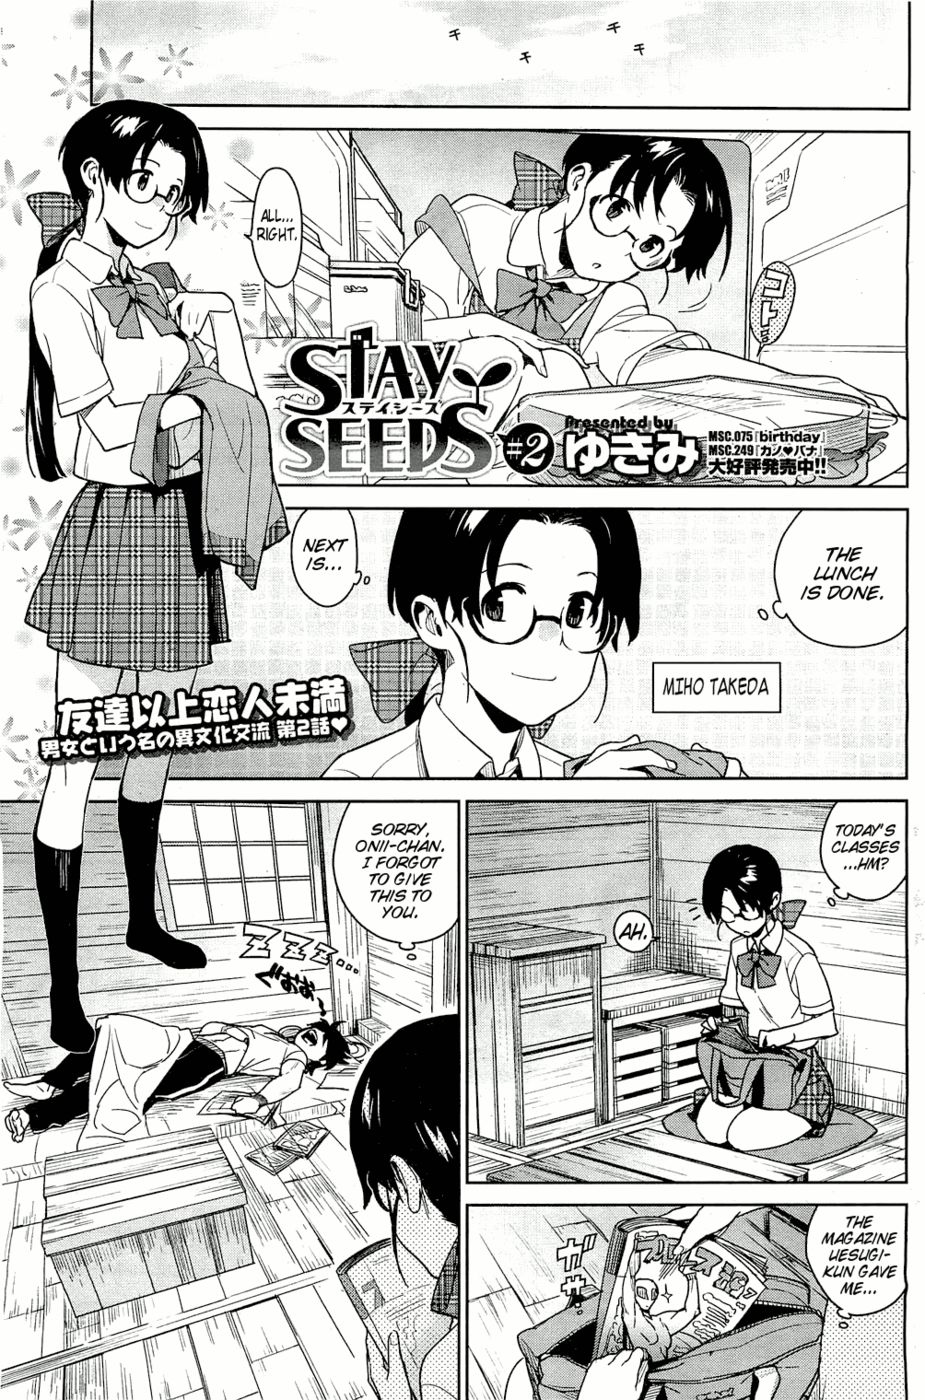 Hentai Manga Comic-Stay Seeds-Chapter 2-1